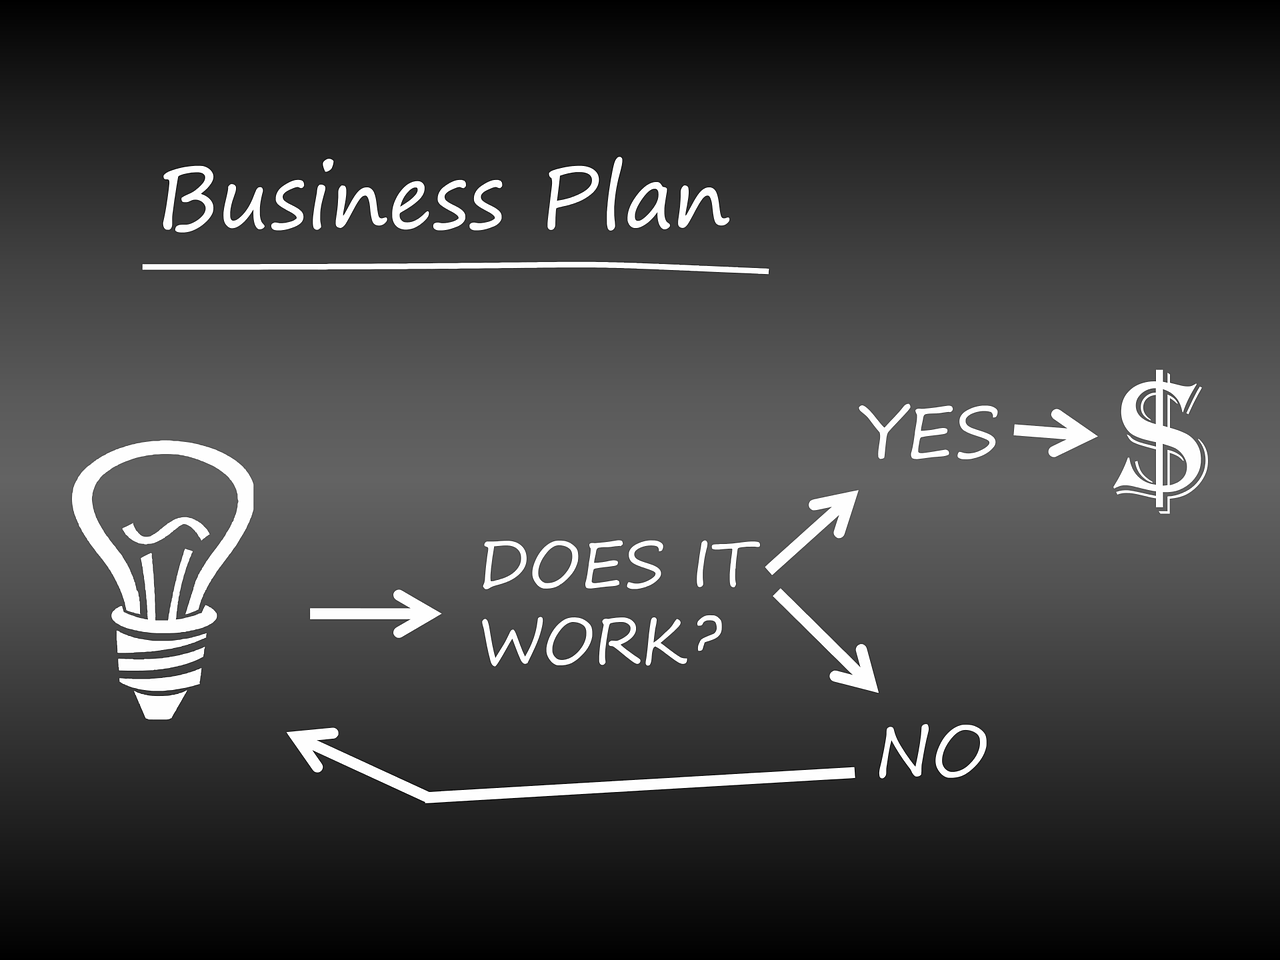 Business Plan Diagram